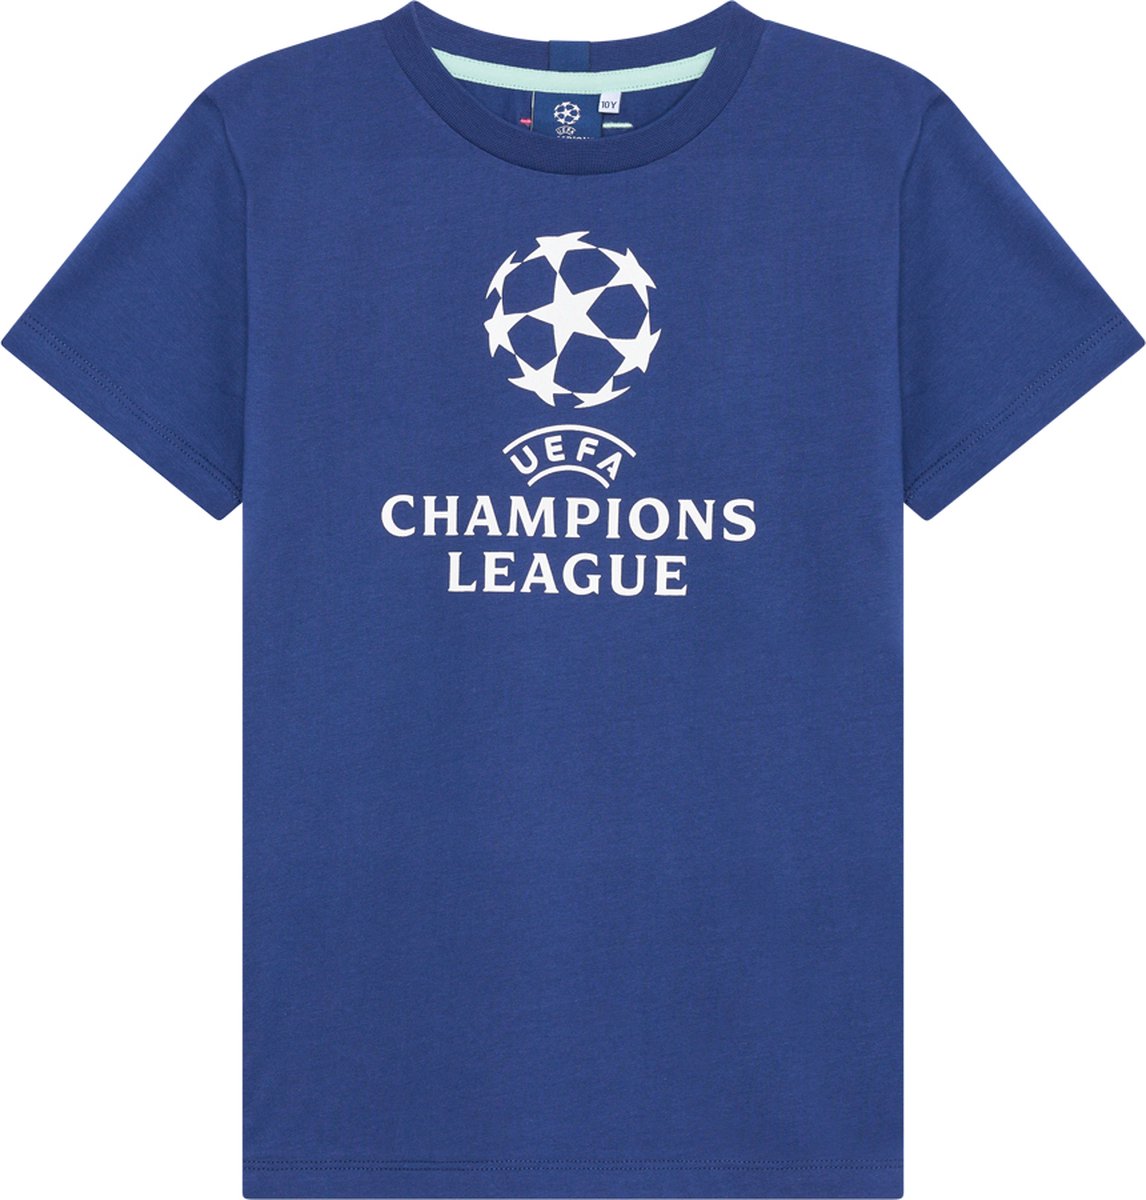 Champions League logo t-shirt kids - Maat 128 - maat 128